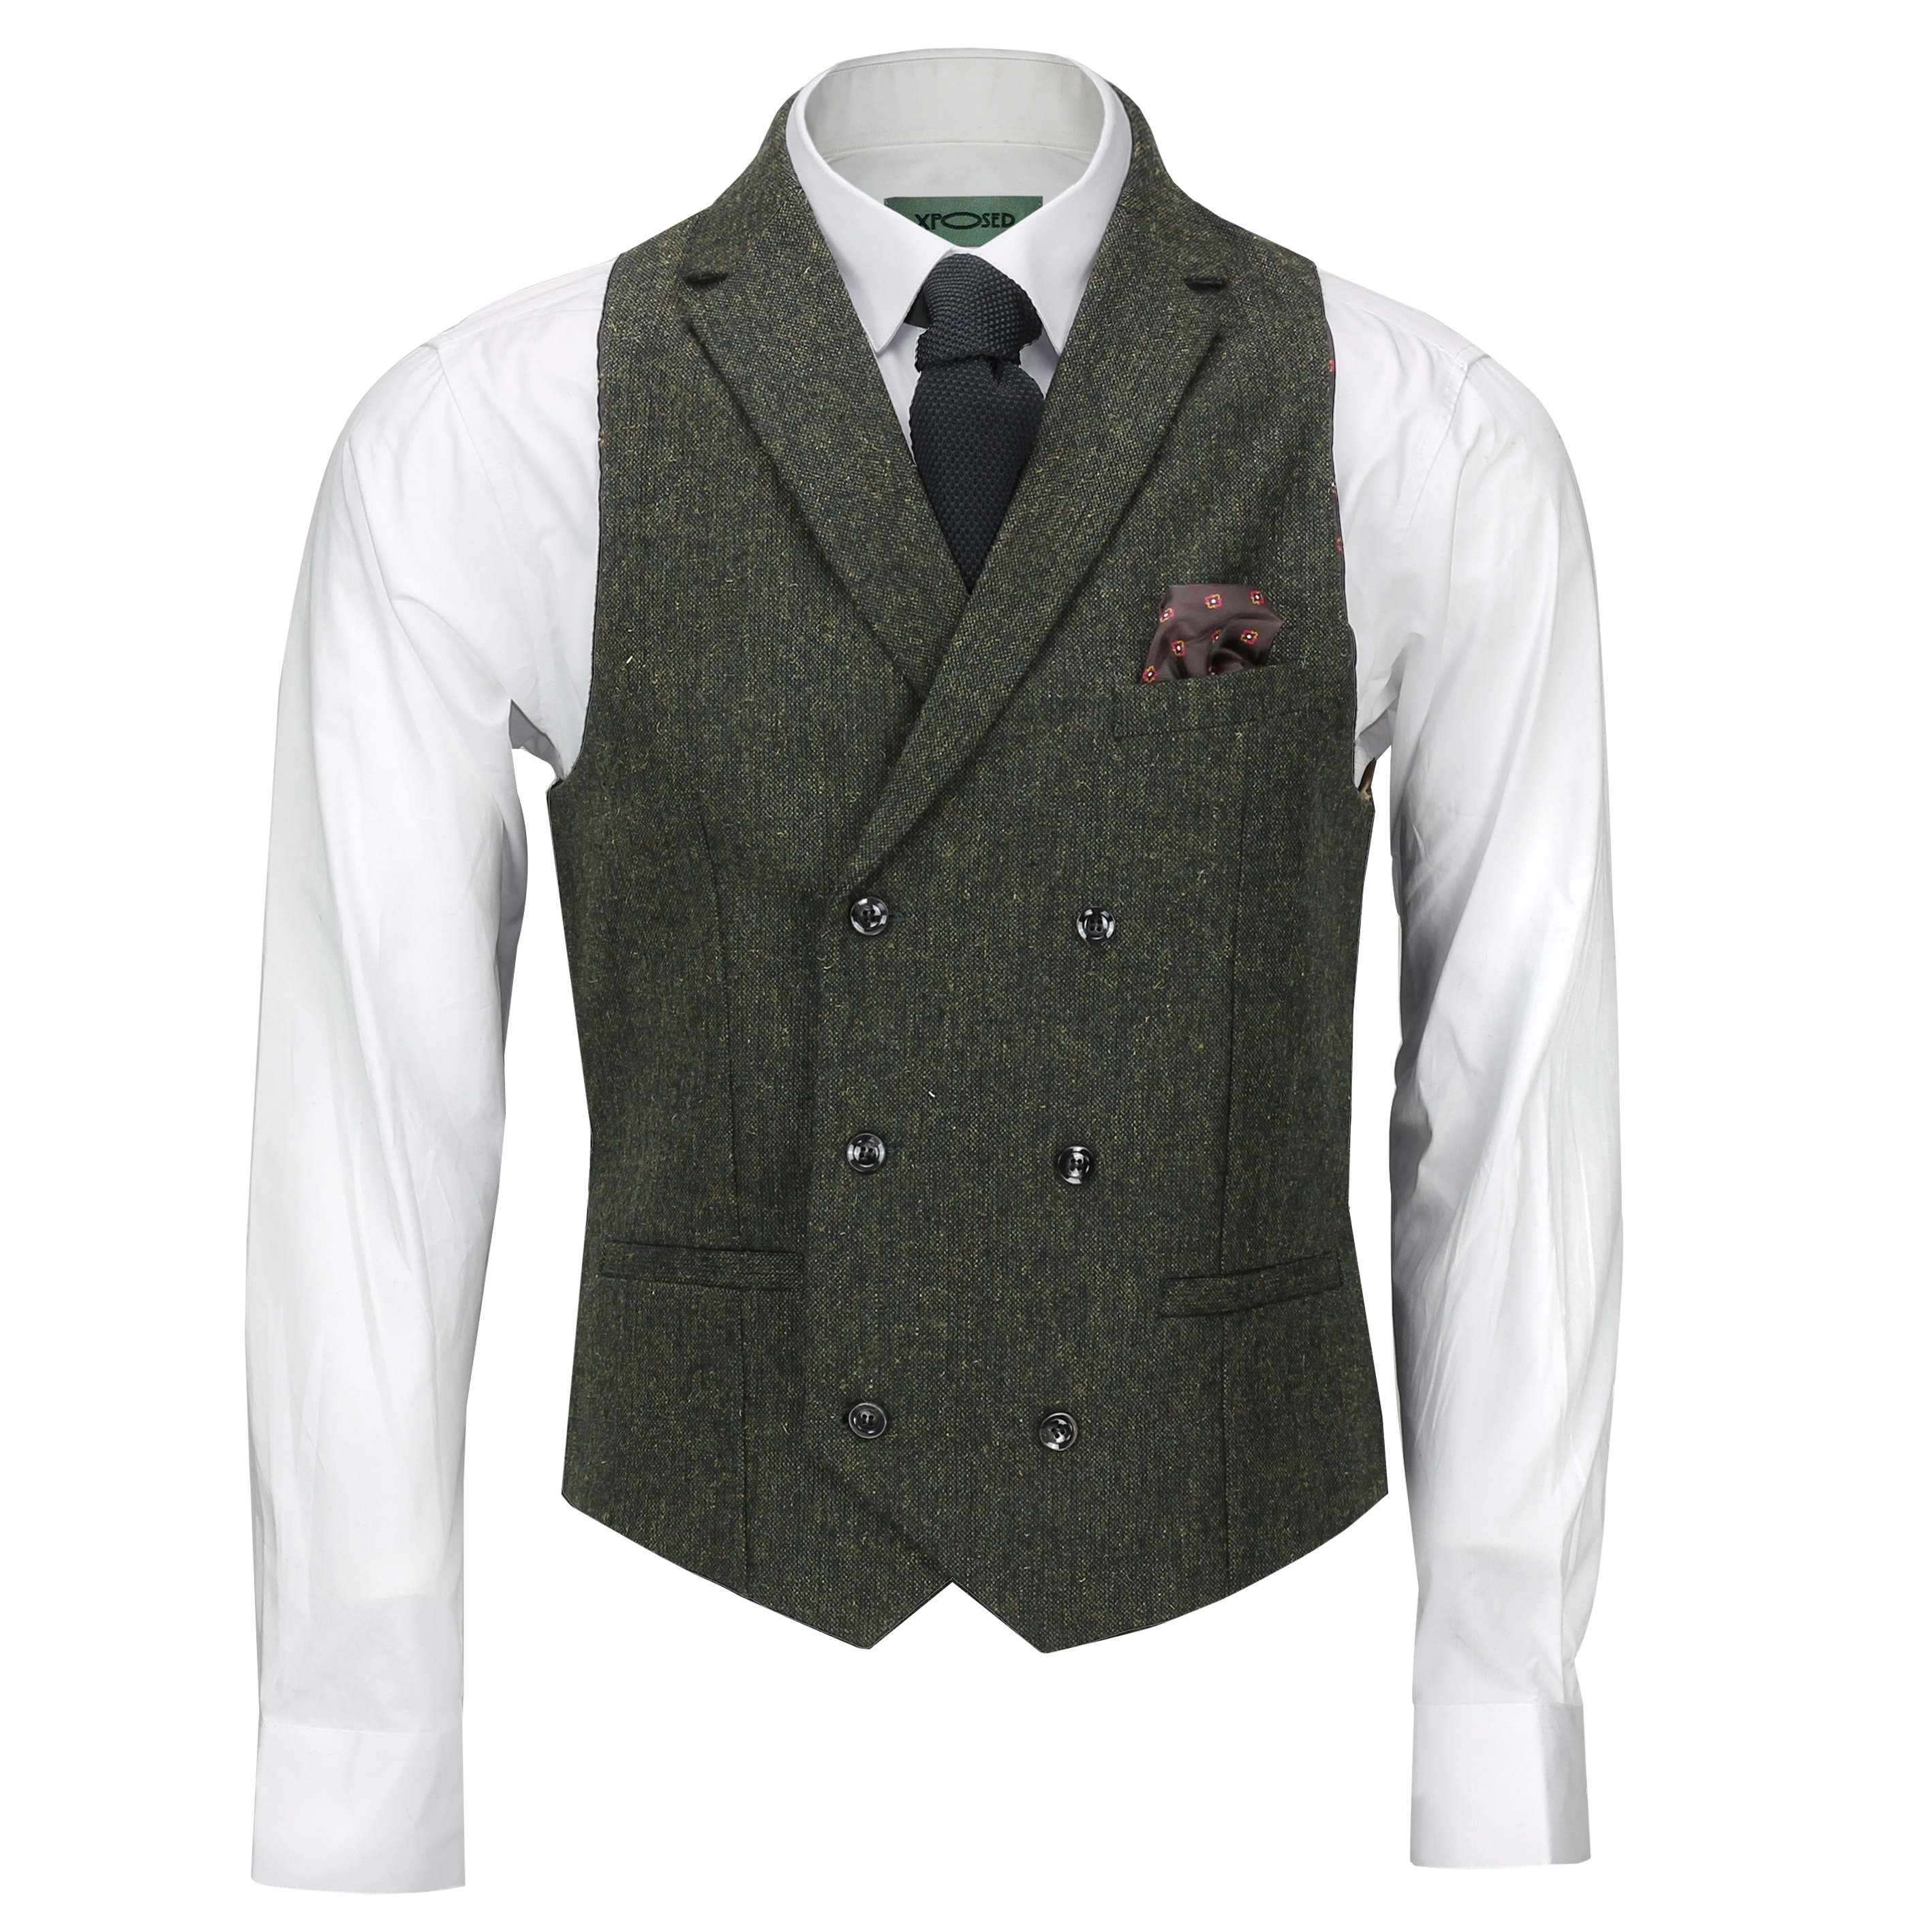 Mens Woolen Double Breasted Jacket Tweed Vest Top Herringbone Waistcoat UK Stock 